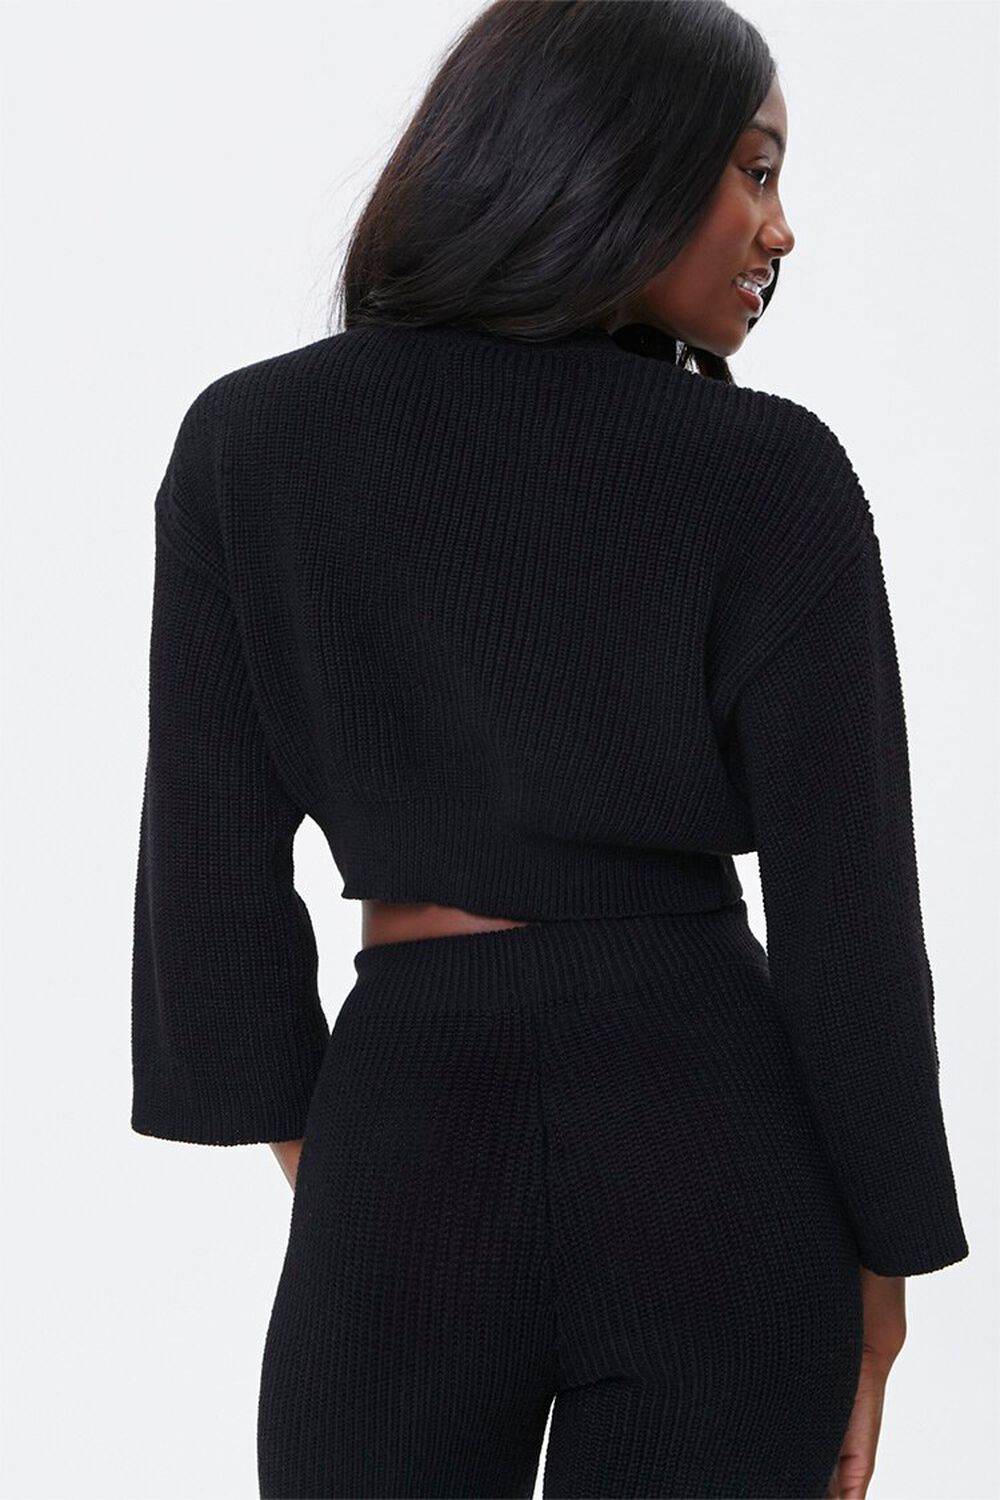 BLACK Drop-Sleeve Sweater, image 3